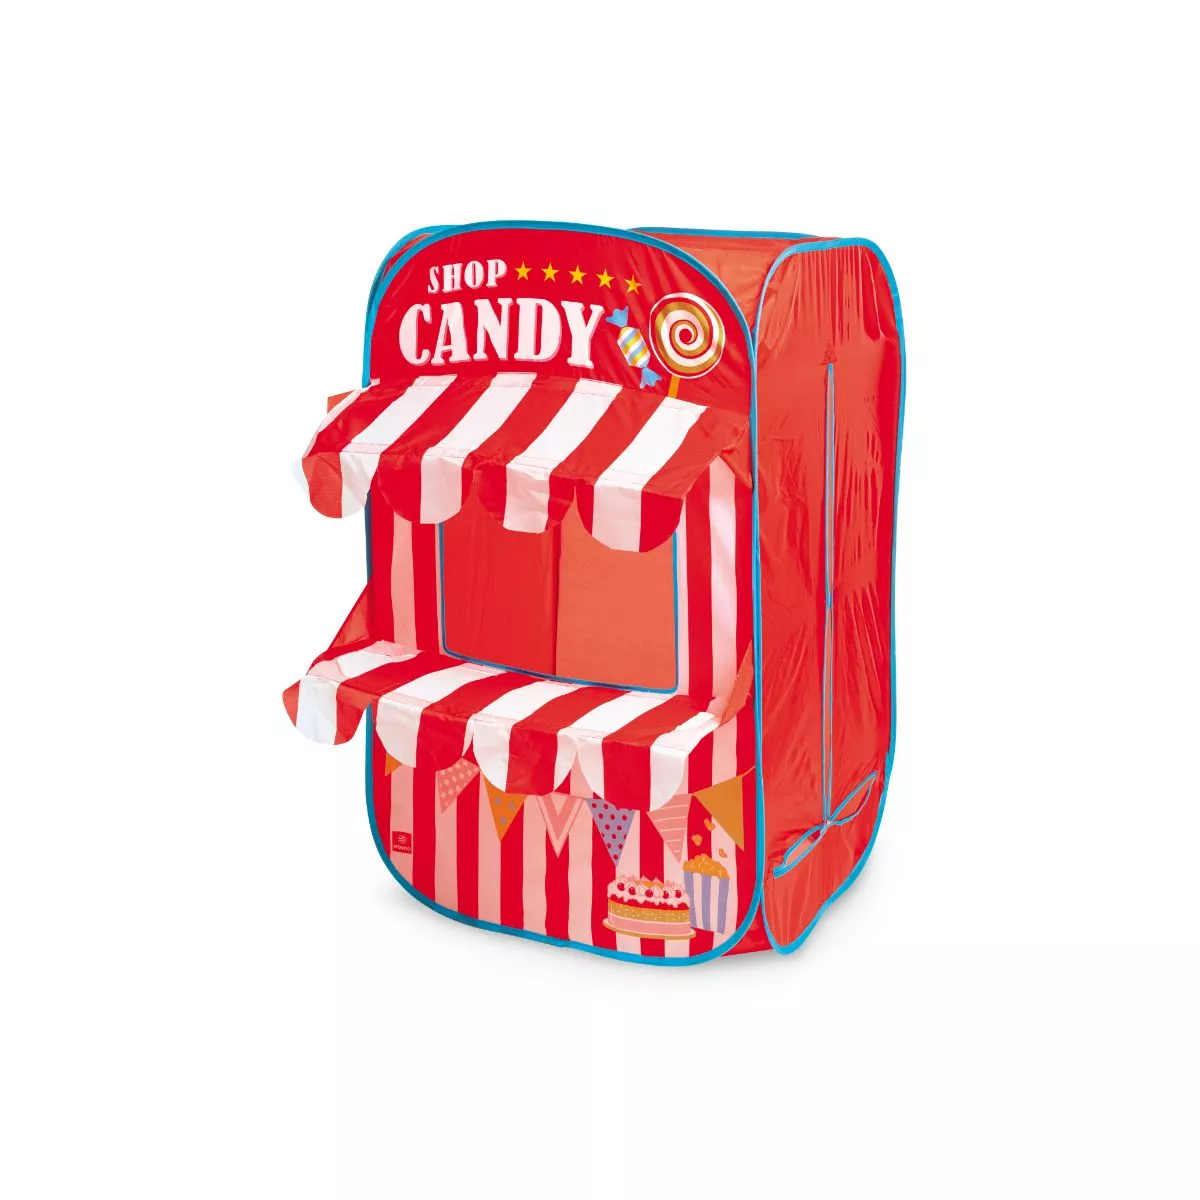 Cort magazin de dulciuri CANDY SHOP TENT 1